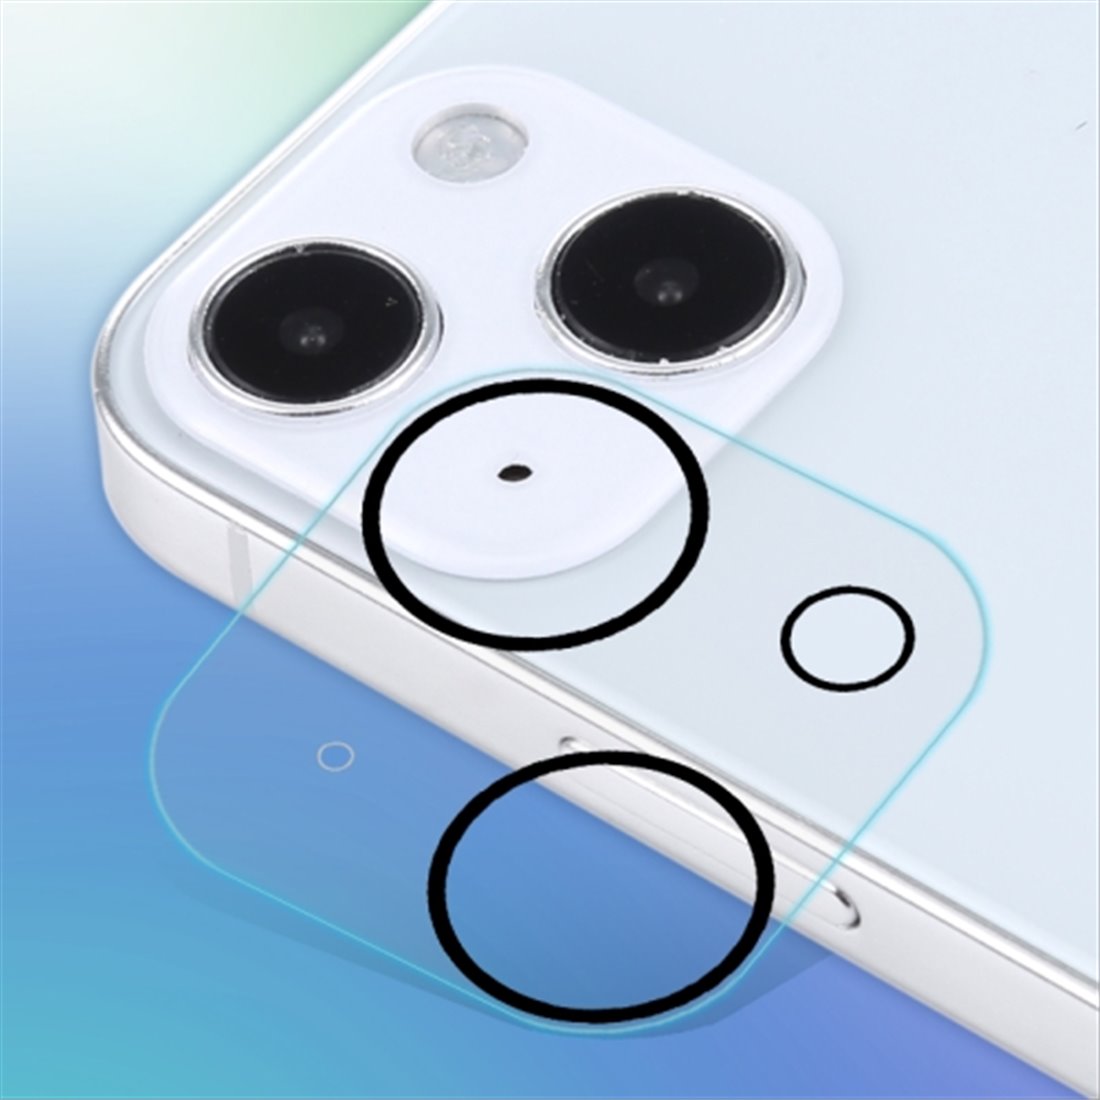 iPhone 13 (mini) camera lens protector